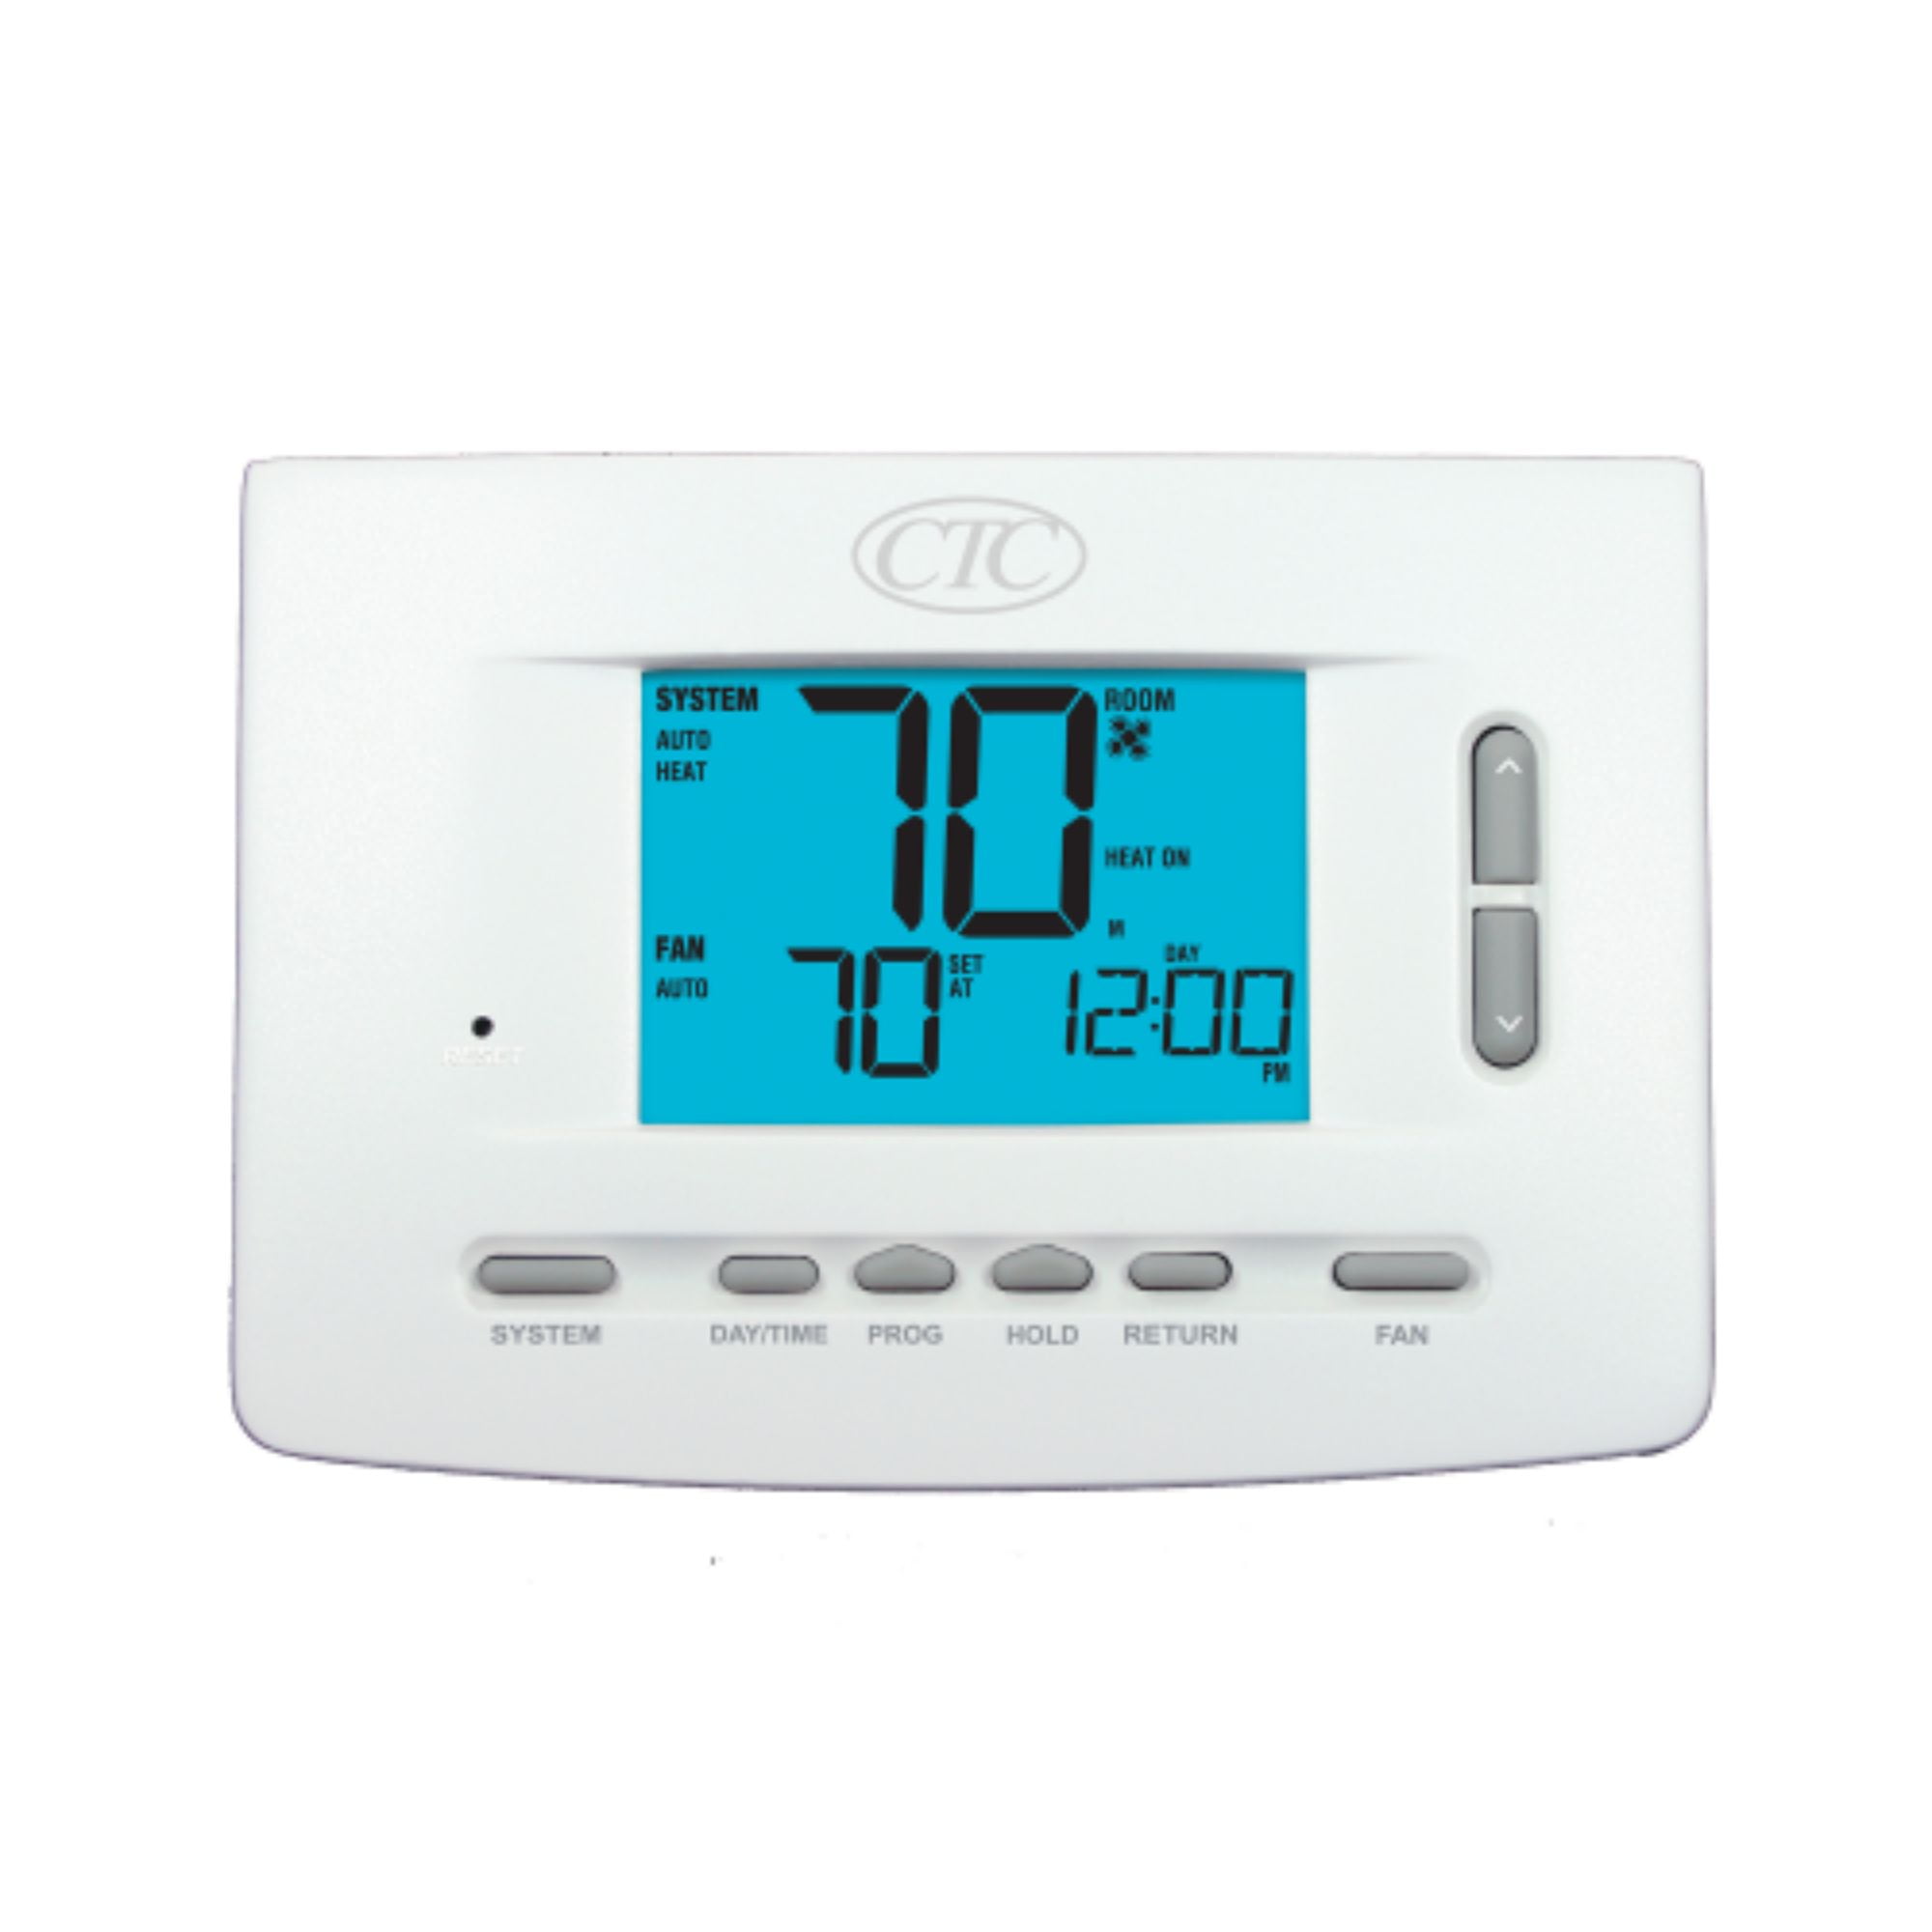 Ctc Thermostat Reset